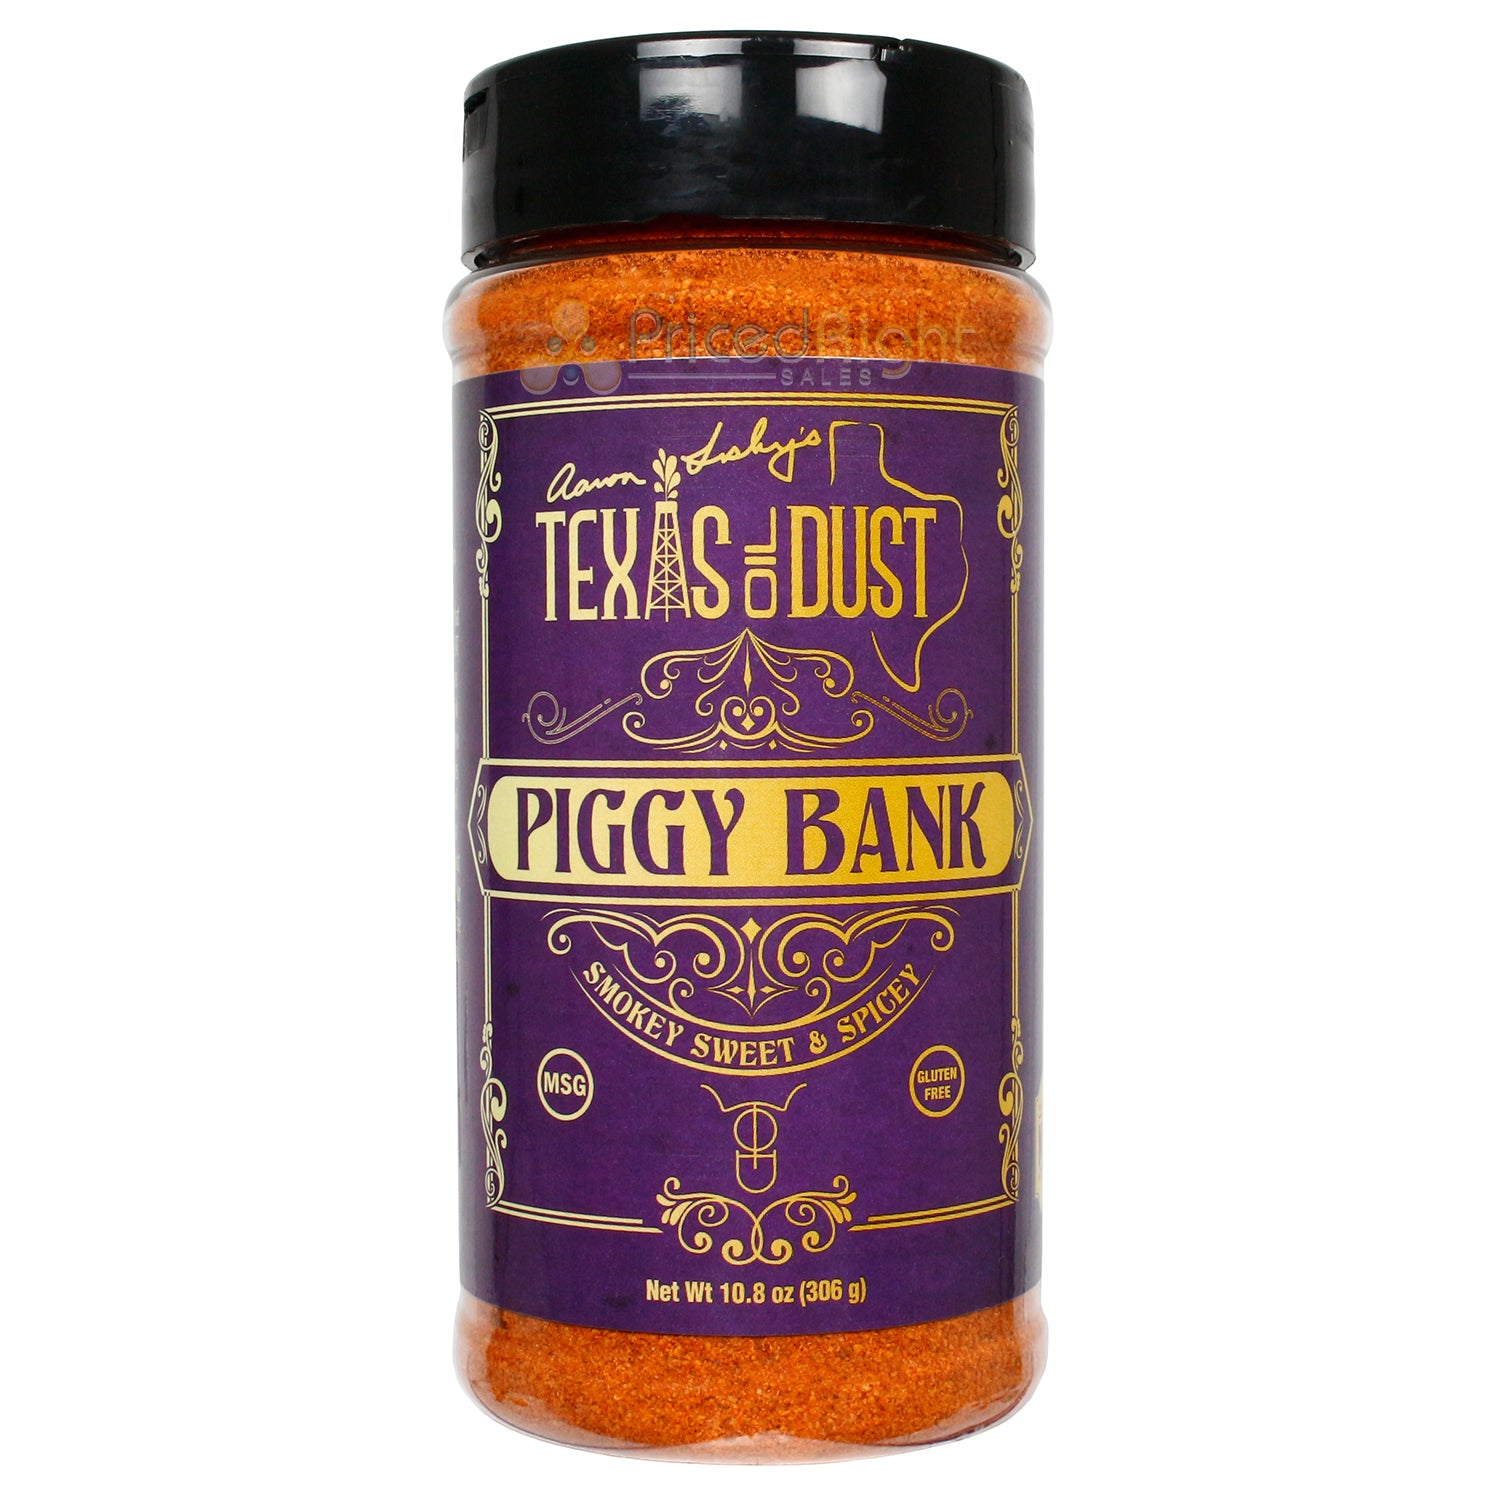 Texas Oil Dust Piggy Bank Pork Rub Smoky Sweet & Spicy No MSG Gluten Free 12oz